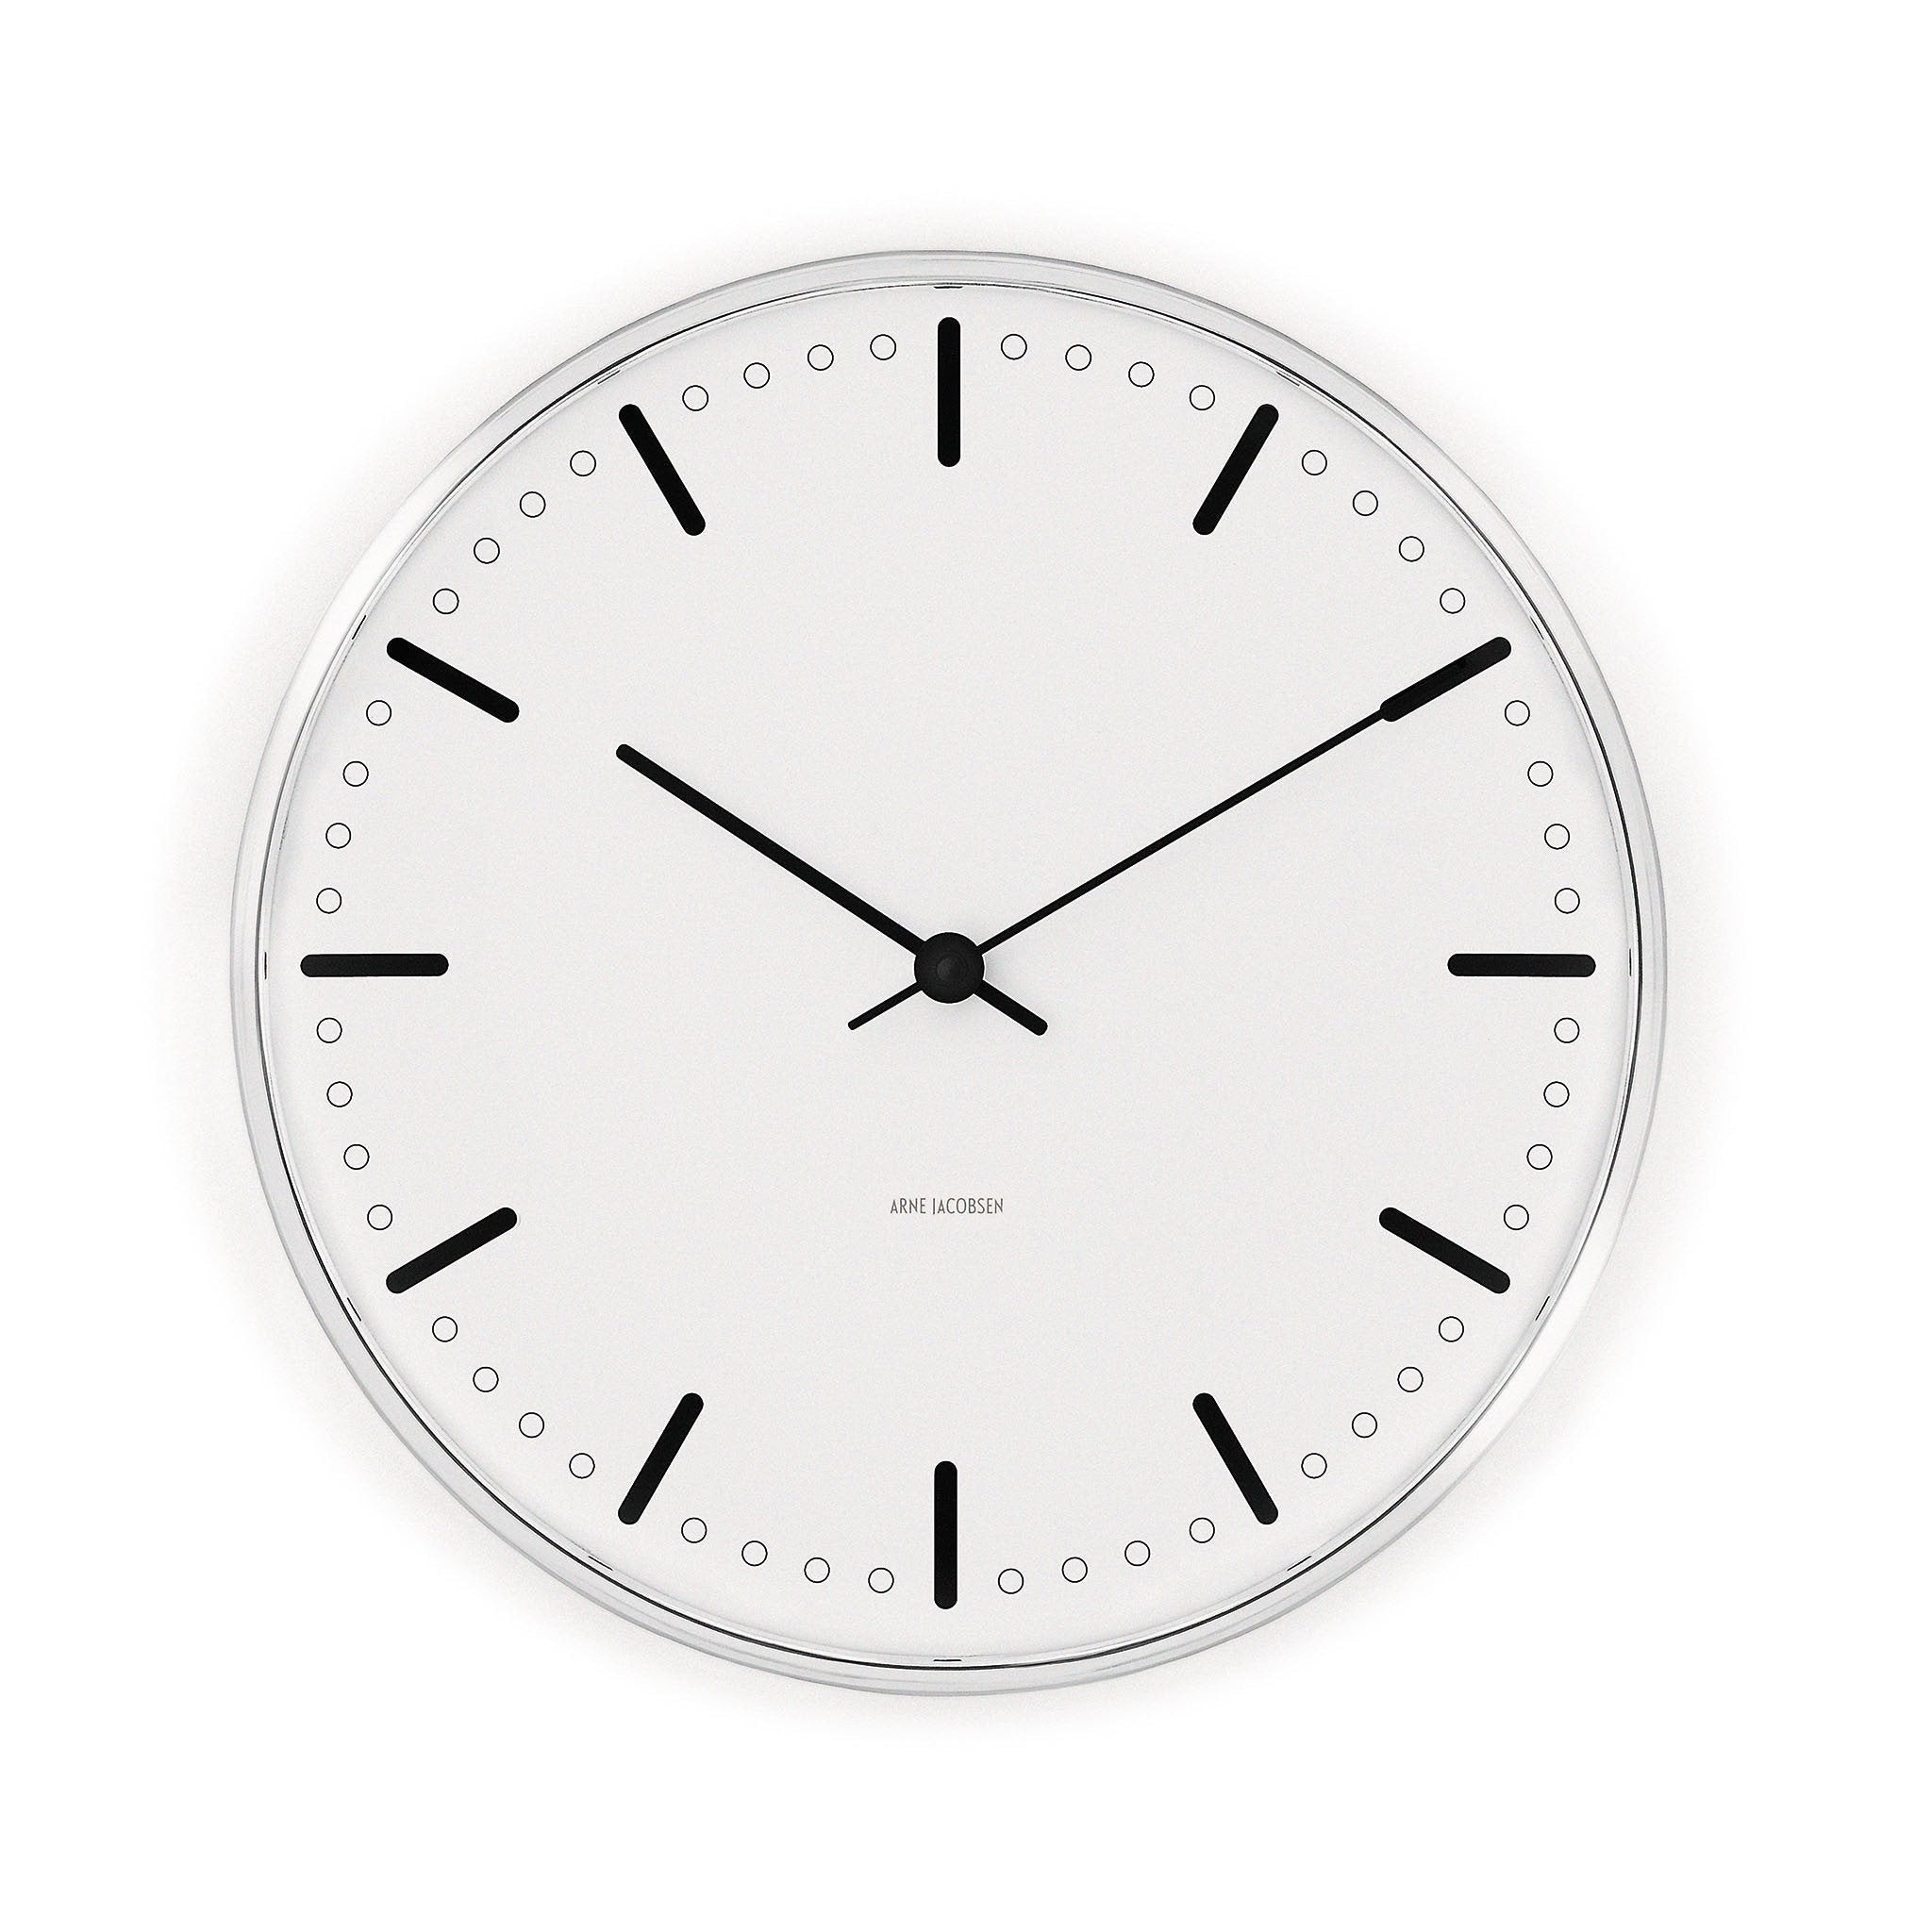 Arne Jacobsen City Hall Clock, 11.4" / 29 cm